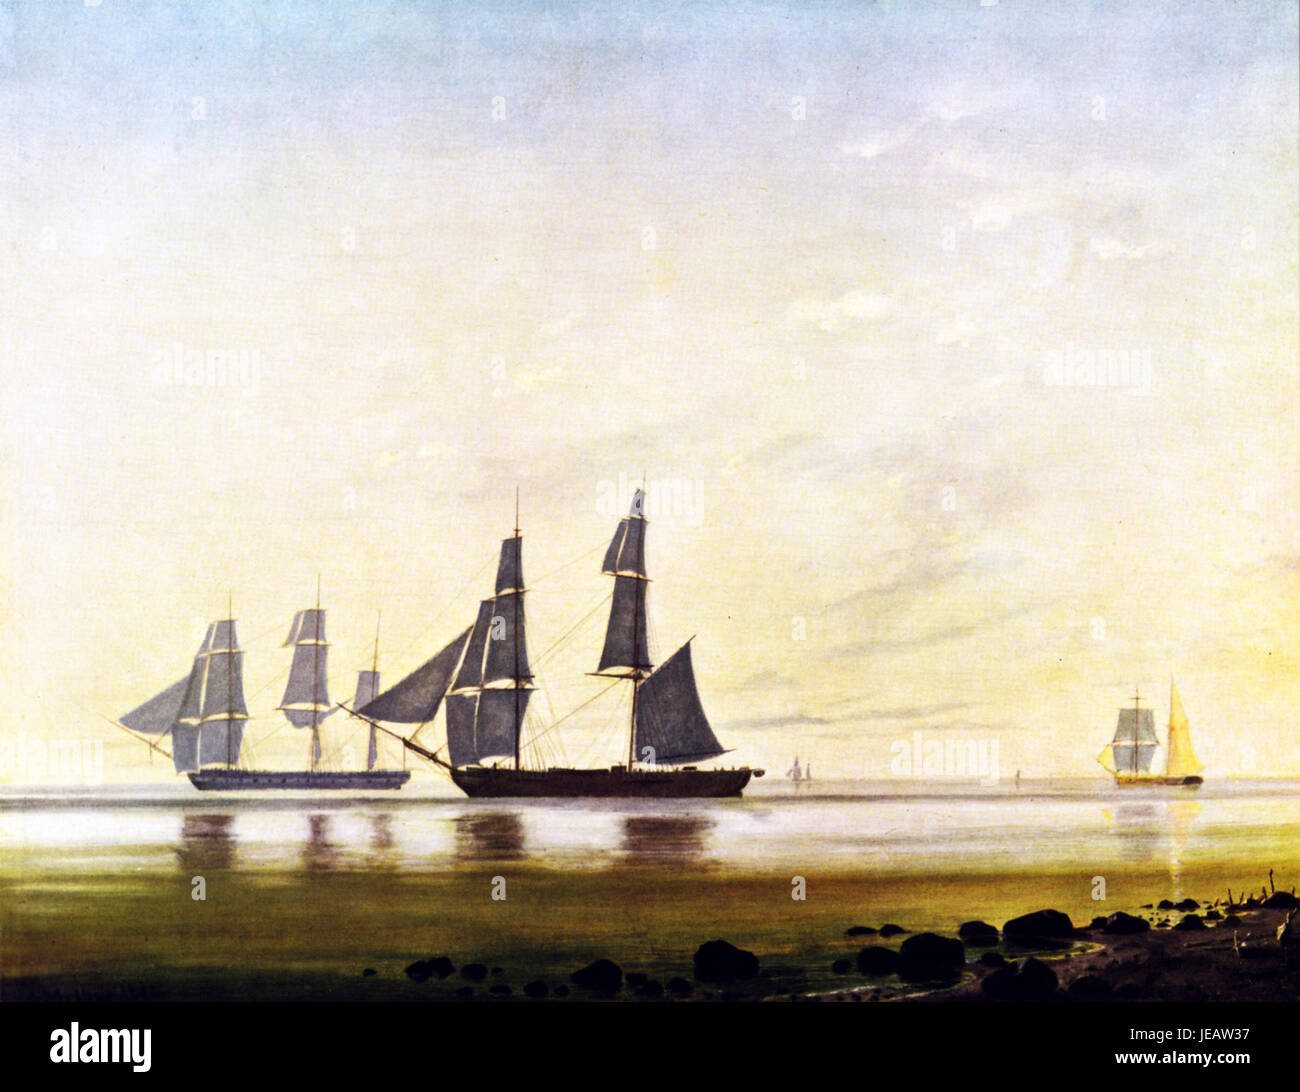 Anton Melbye - En fregat og en brig under kysten - 1844 Stock Photo